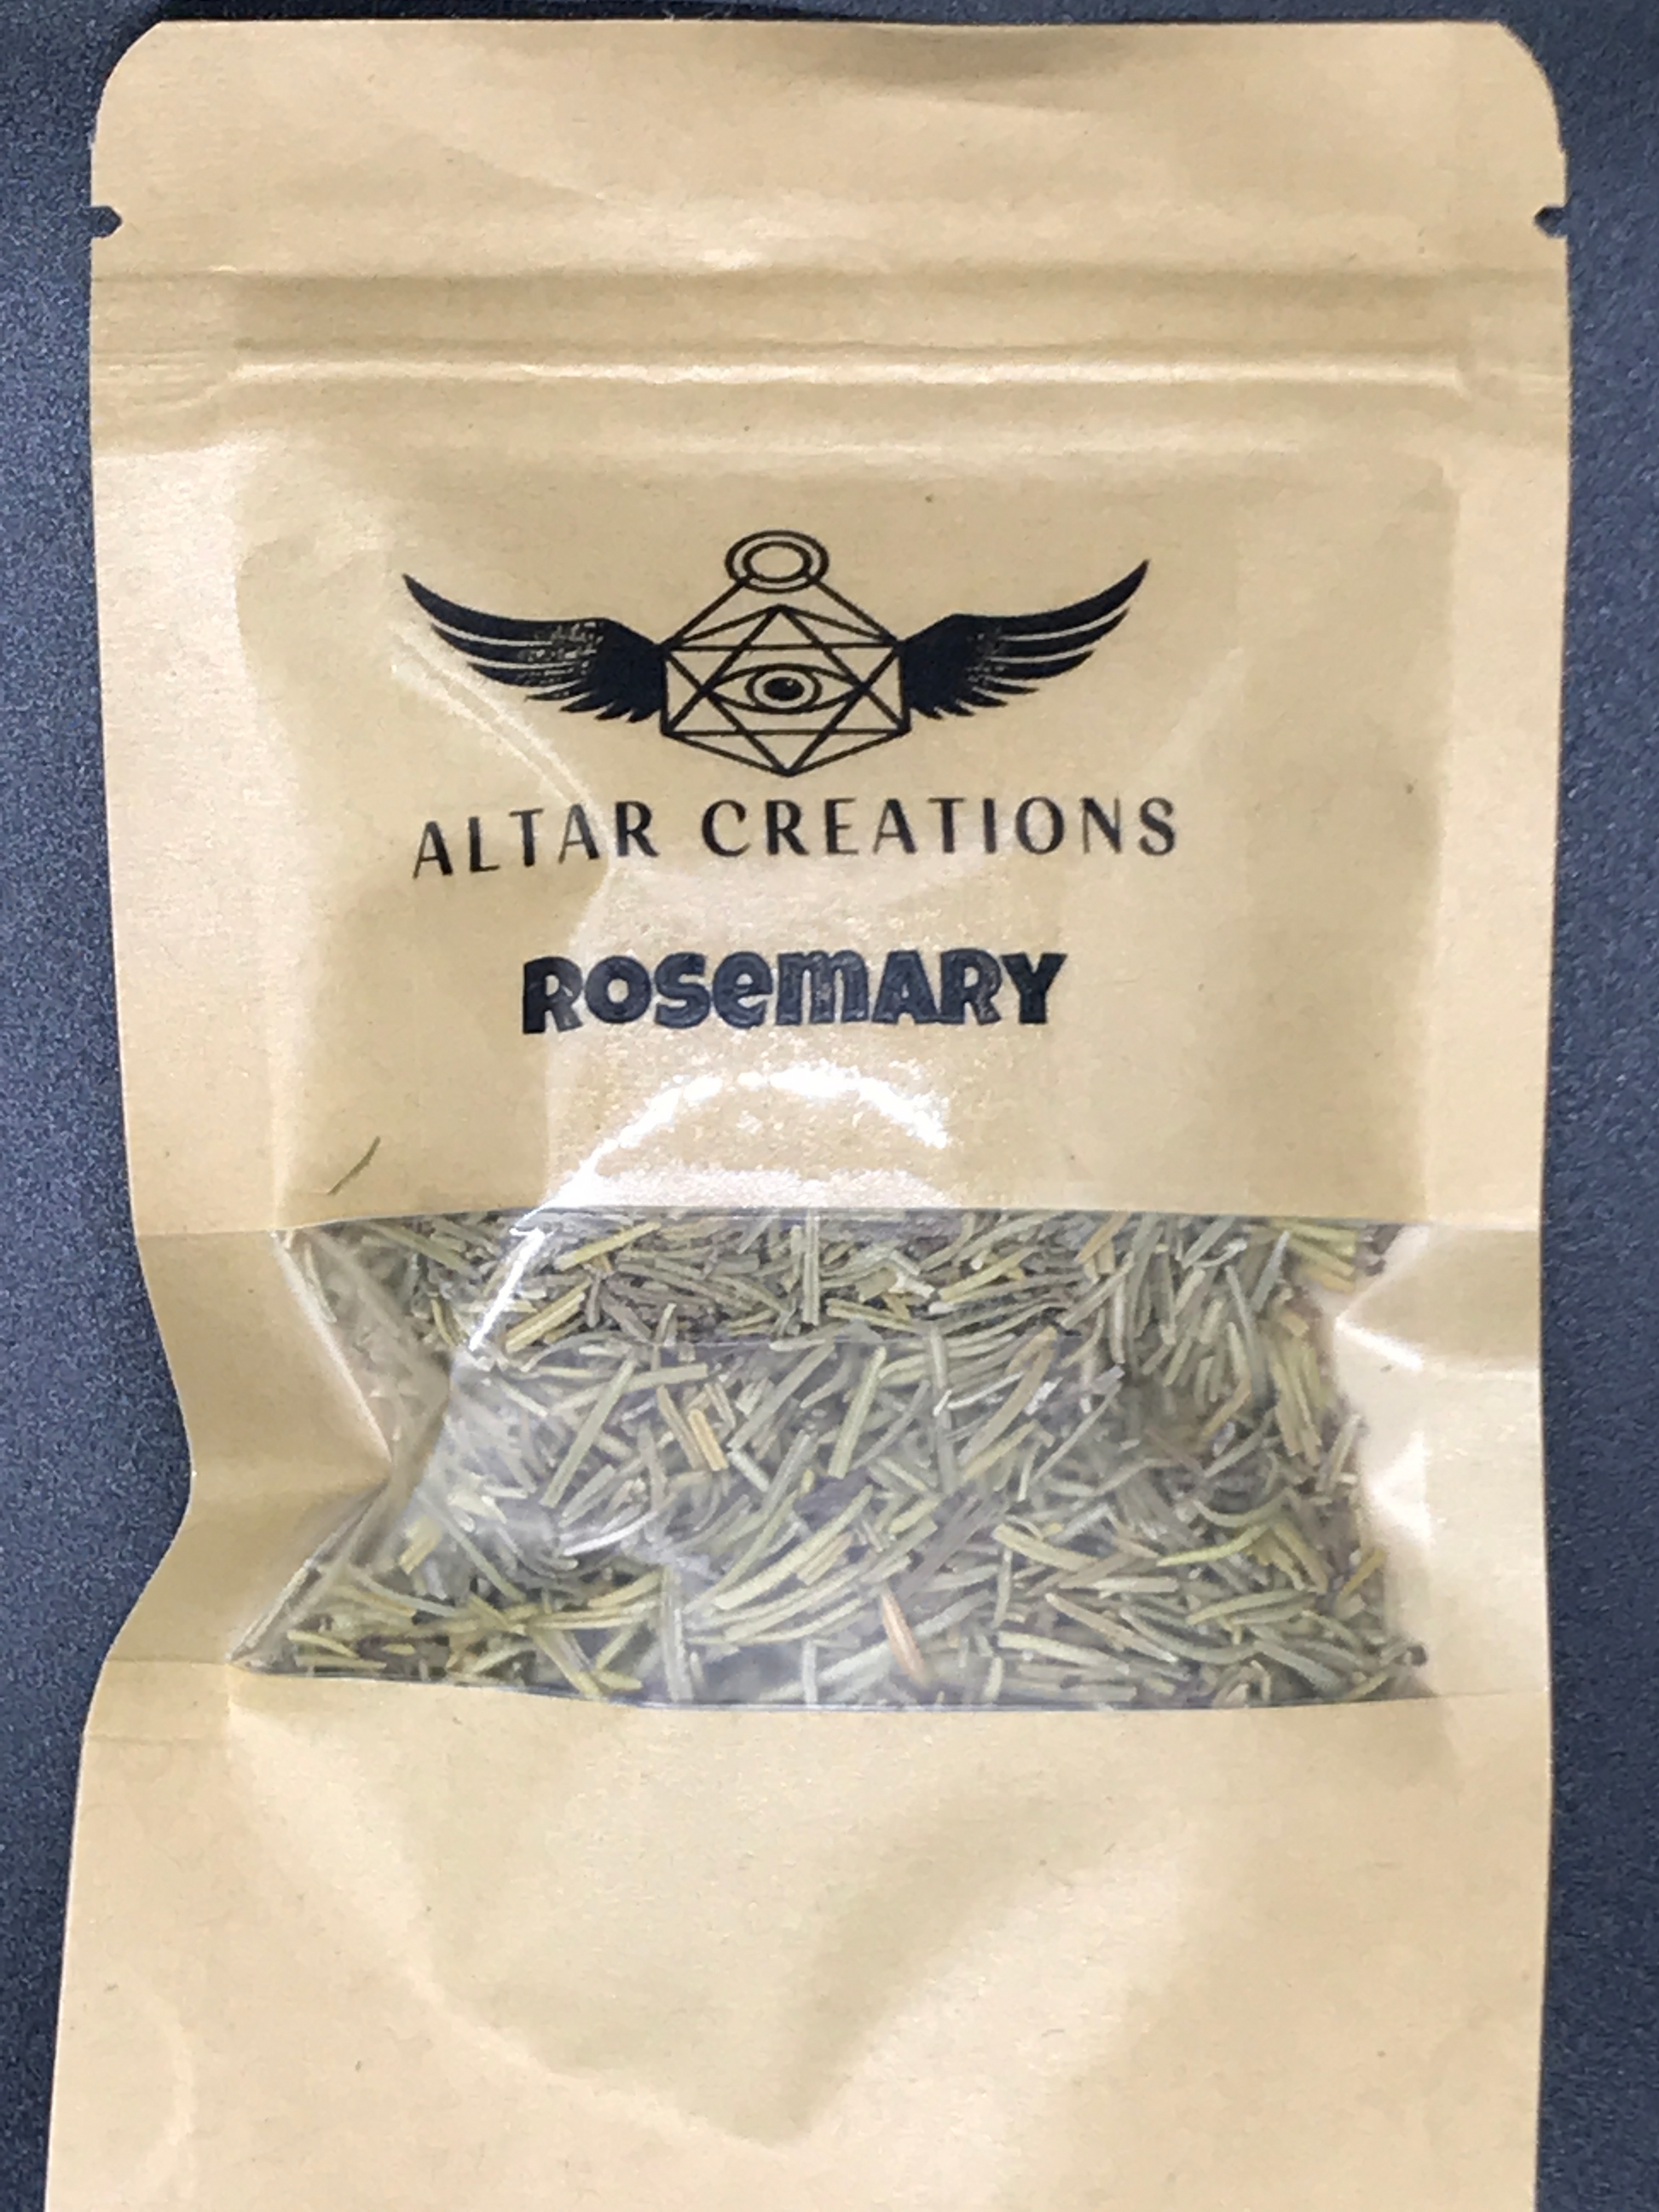 Rosemary - The Columbian Exchange Group